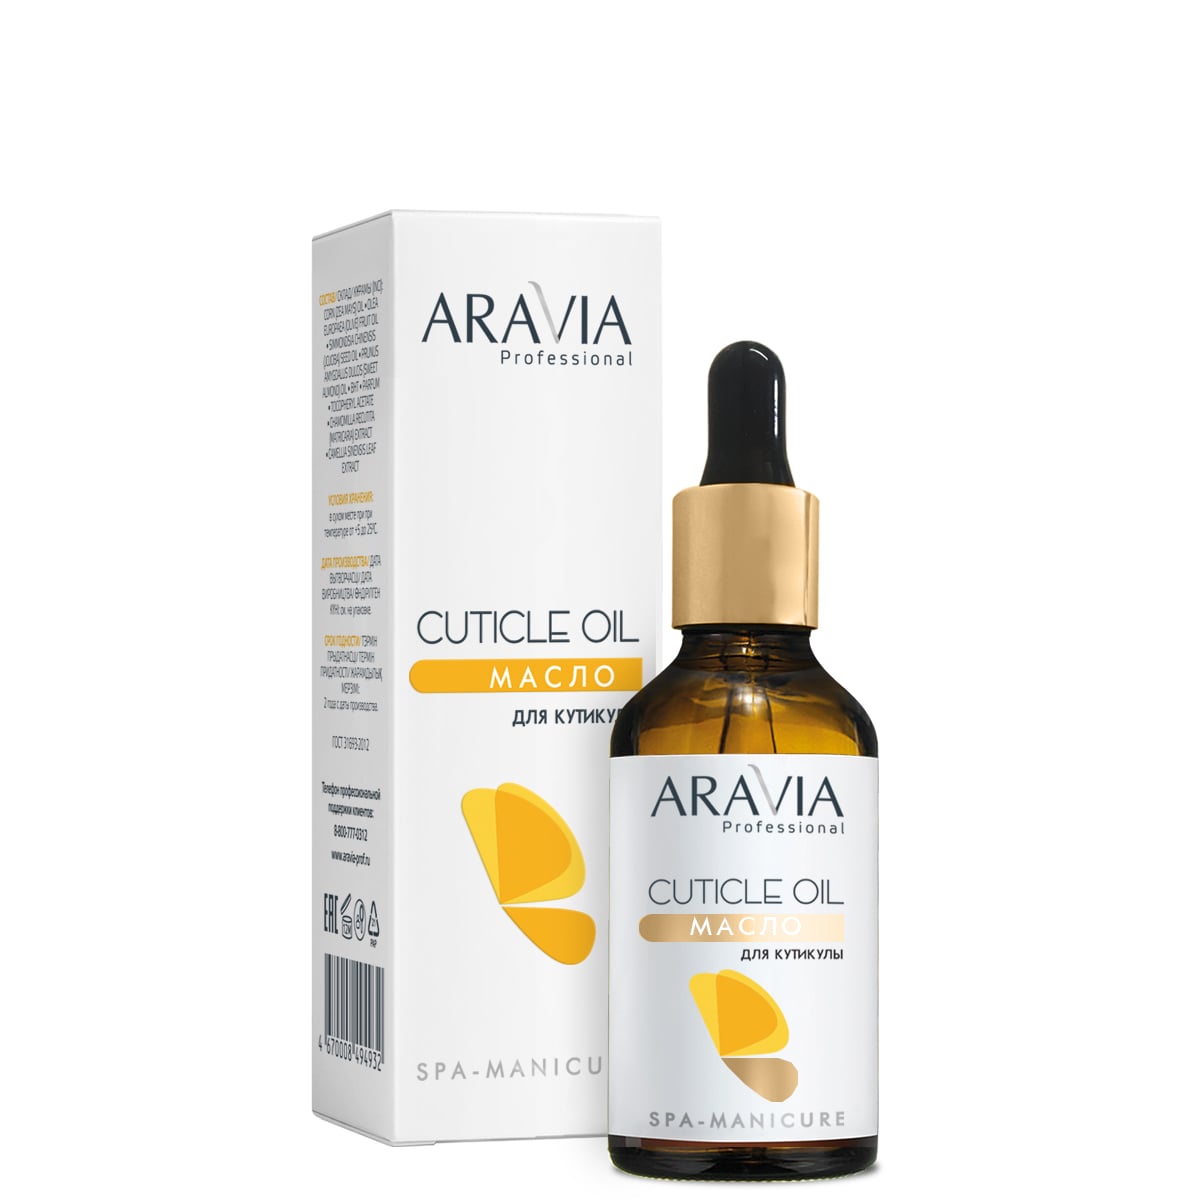 Aravia Professional, Cuticle Oil, Масло для кутикулы, 50мл